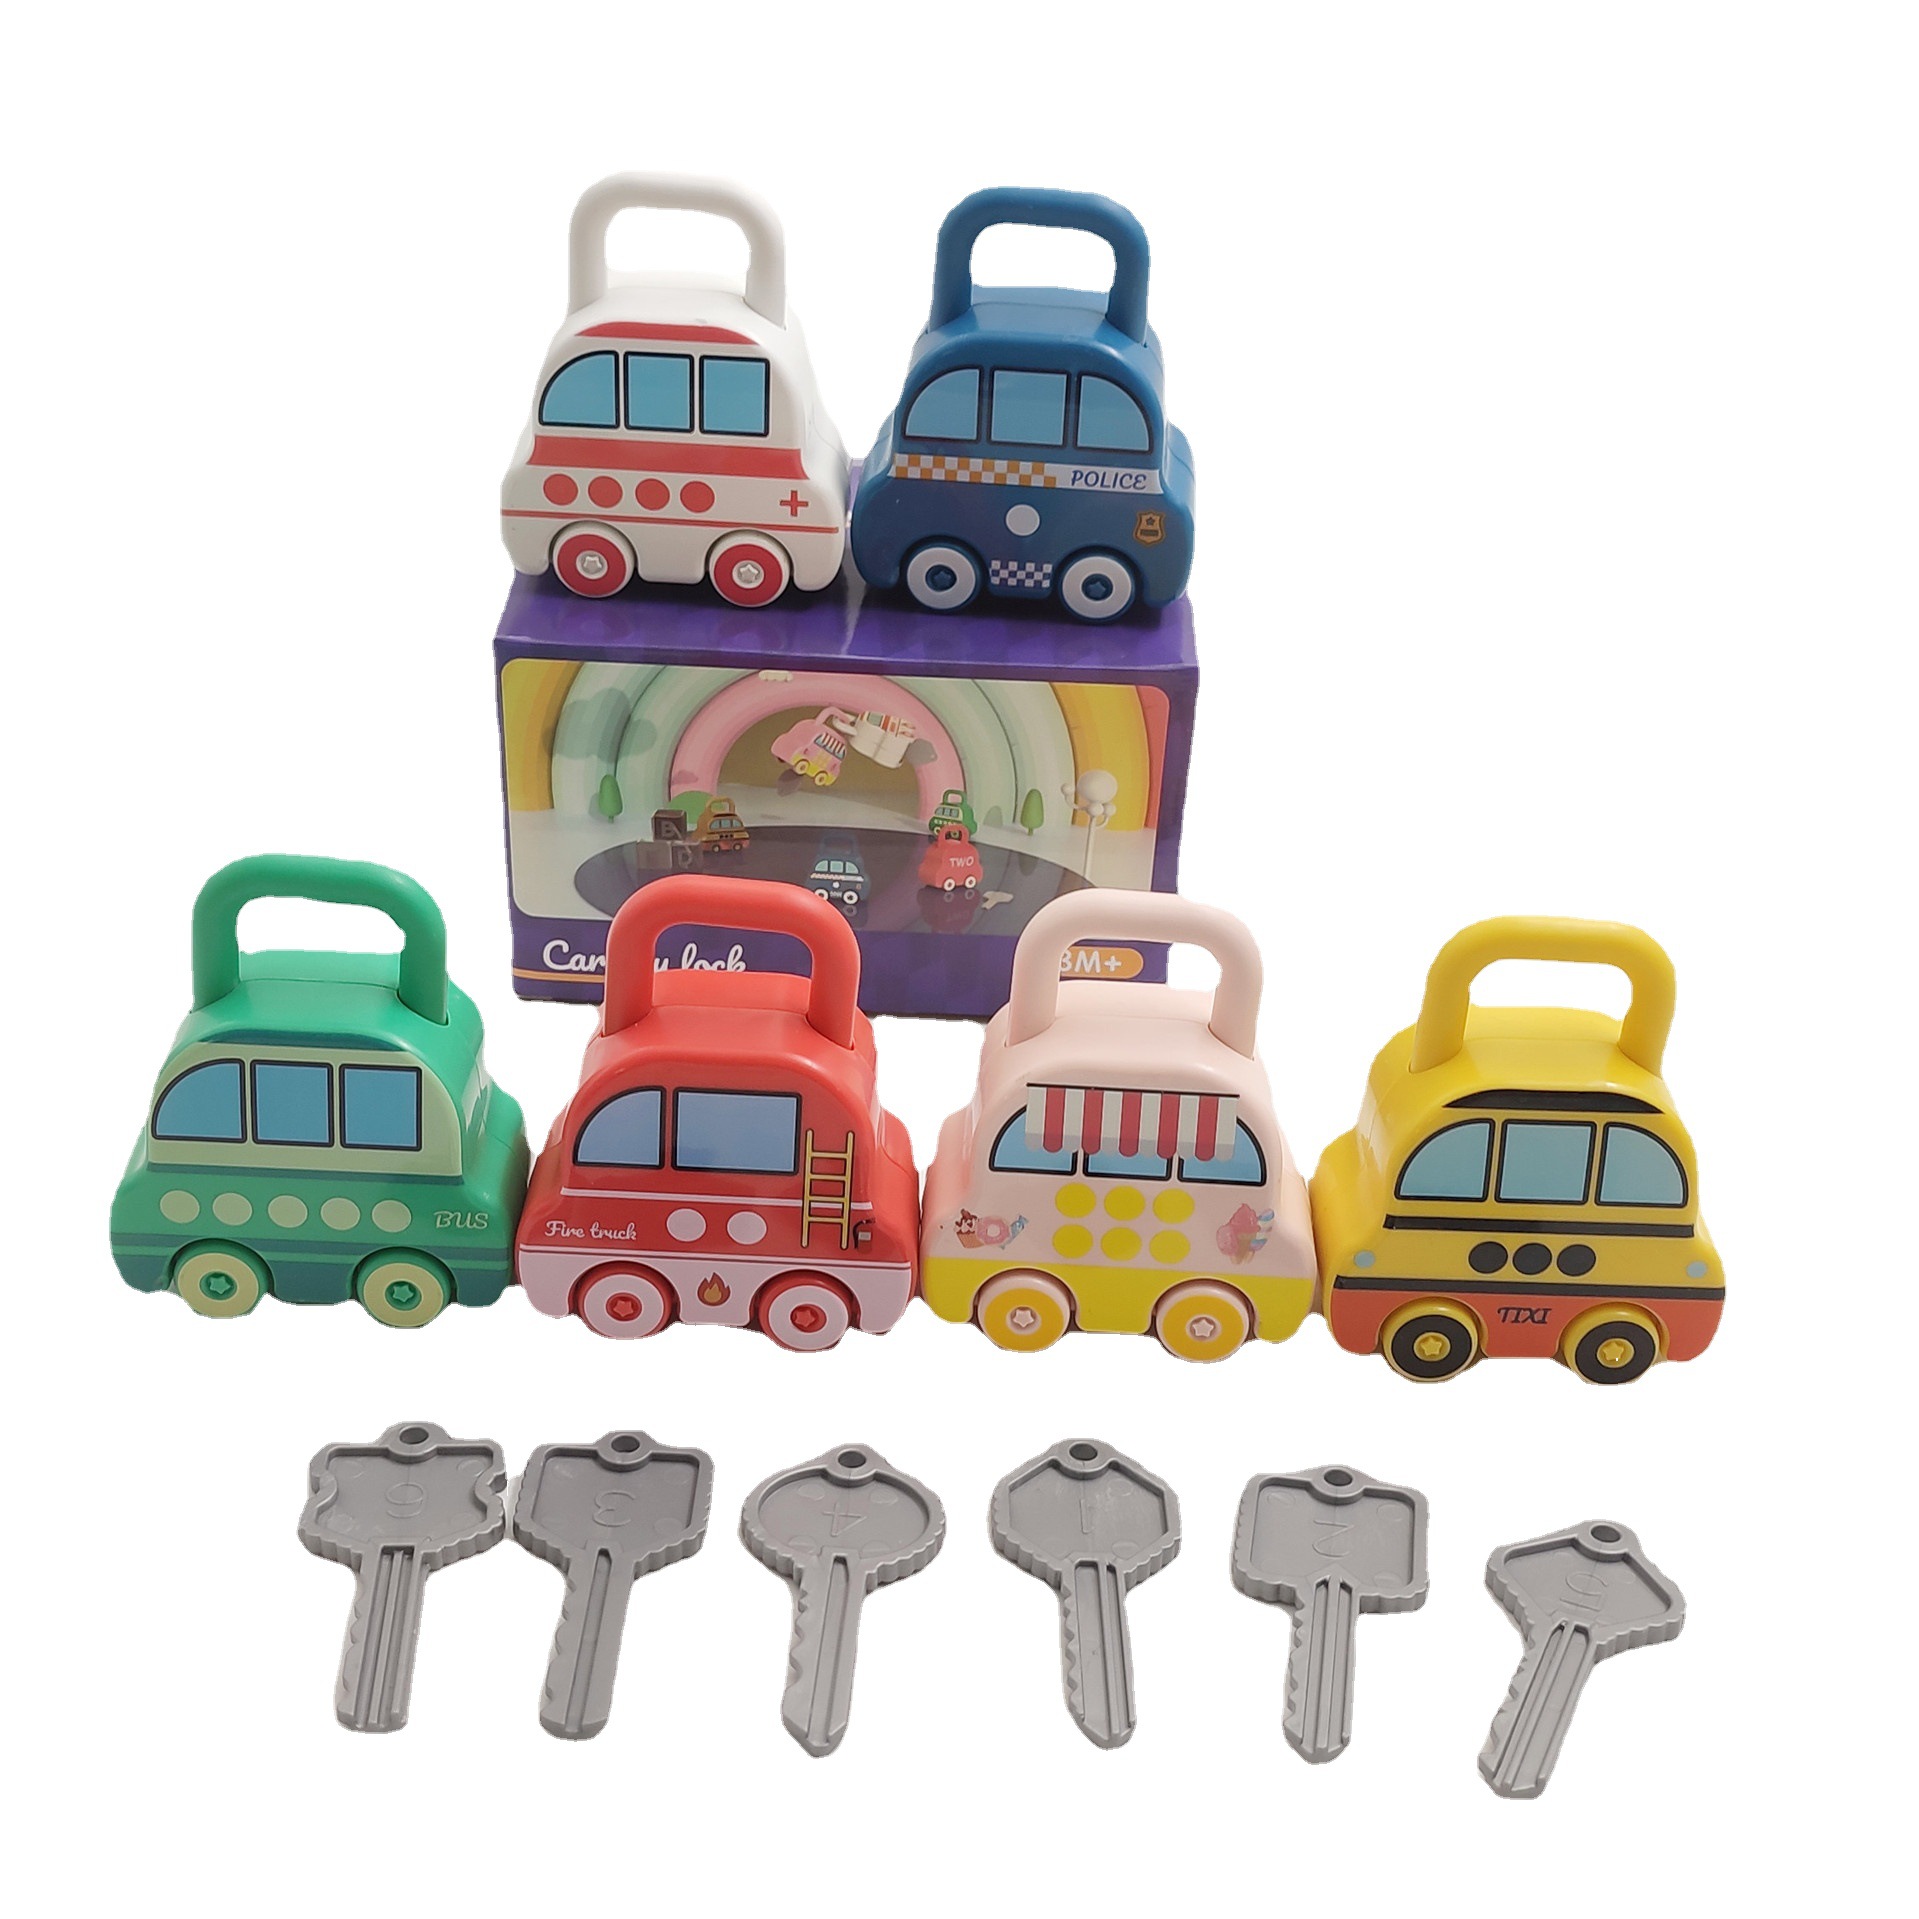 3Pcs/Set Learning Locks With Keys Car Games For Kids Children